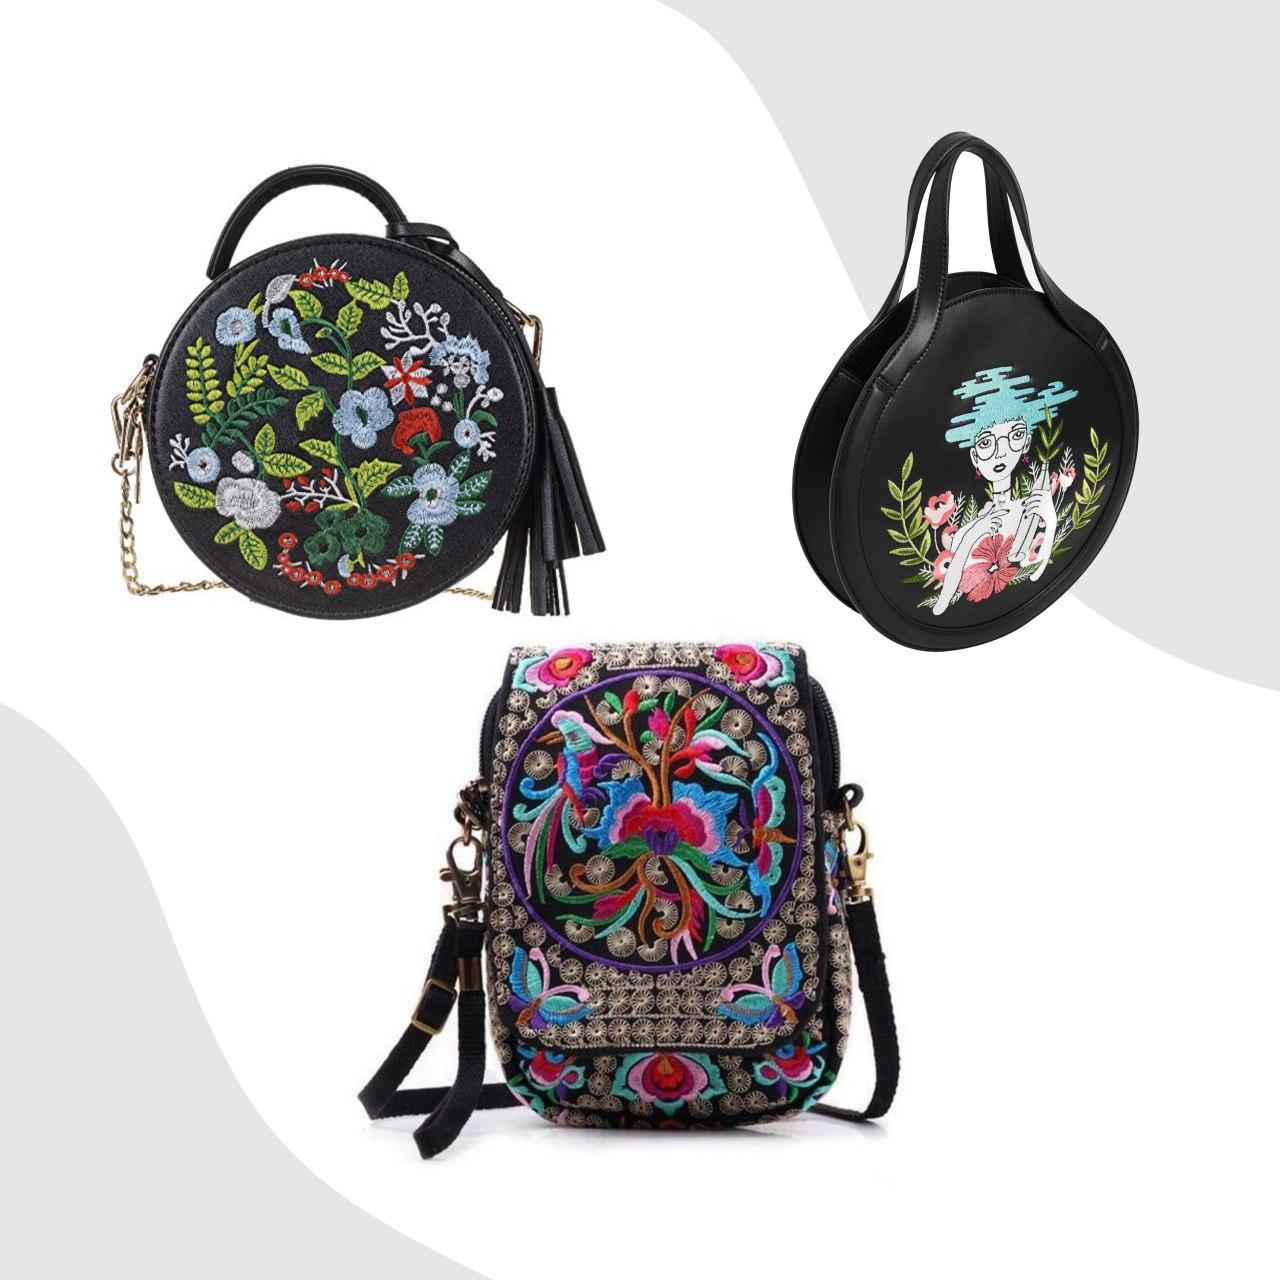 Embroidered trendy handbags